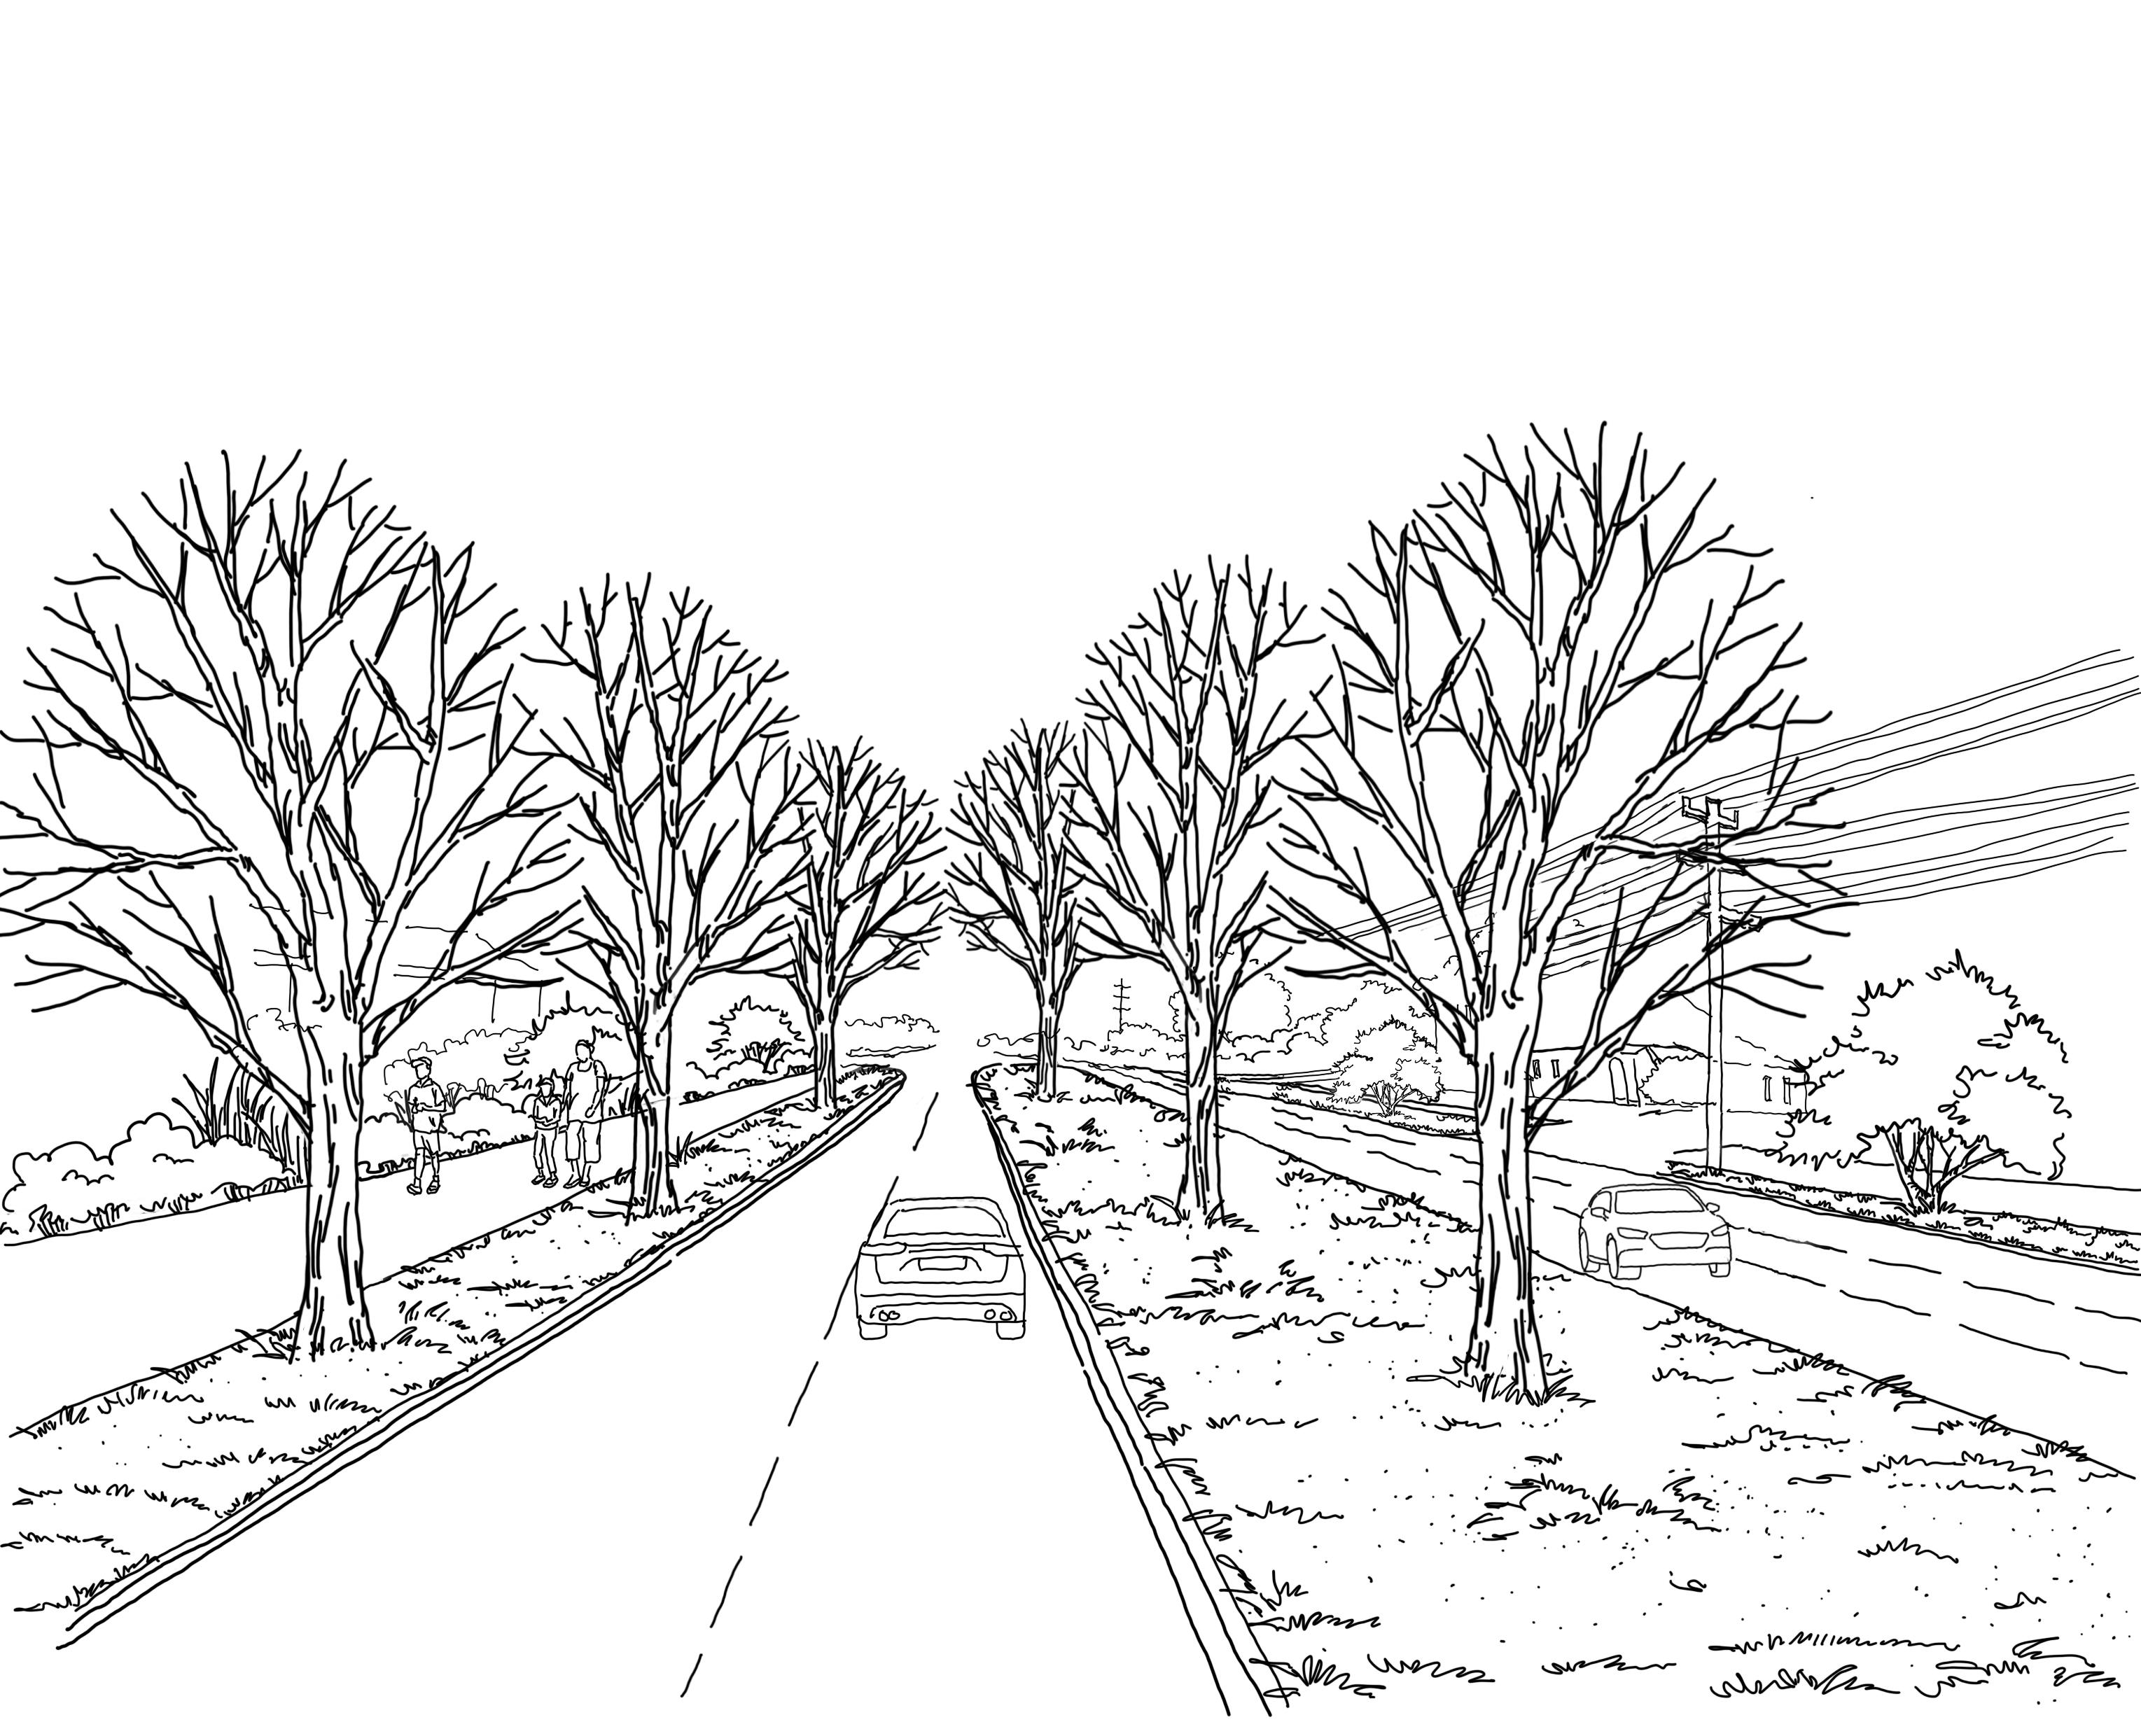 Provide and Avenue of Honour tree memorial